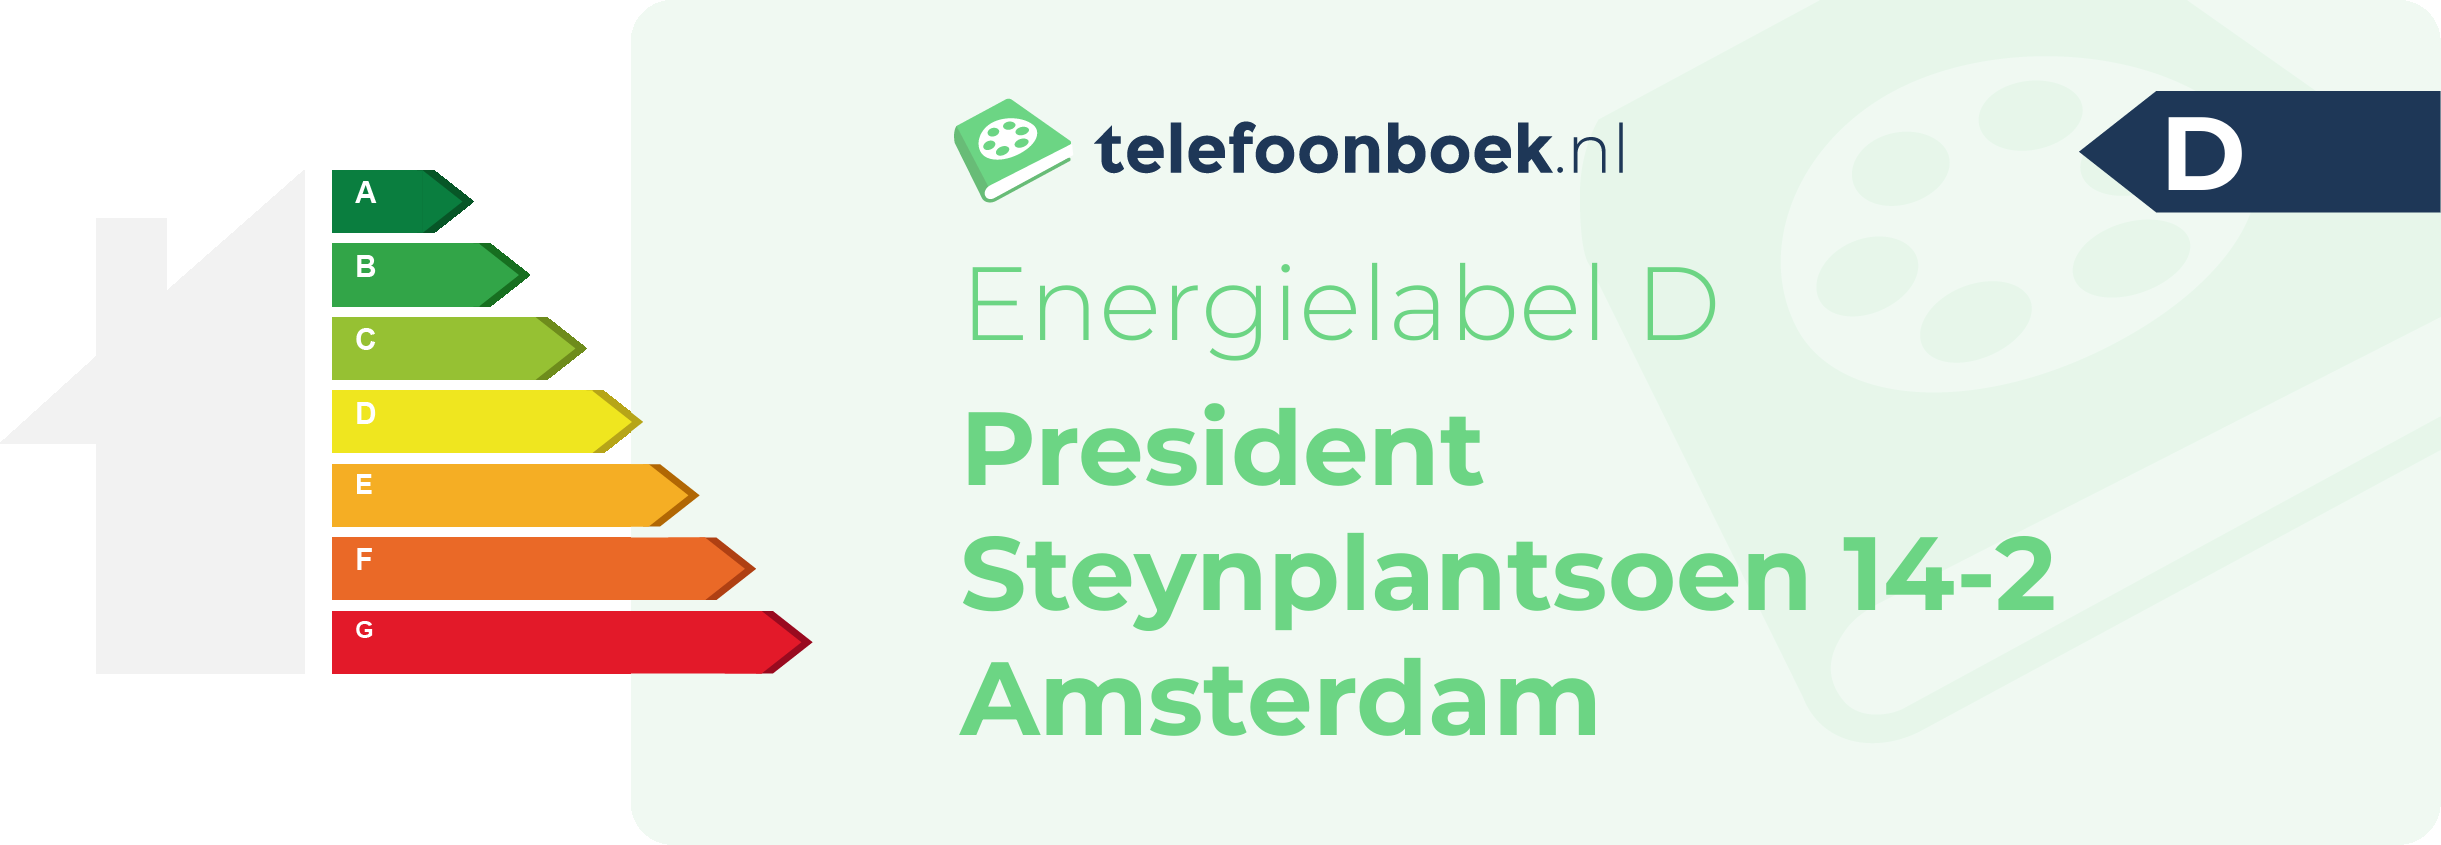 Energielabel President Steynplantsoen 14-2 Amsterdam